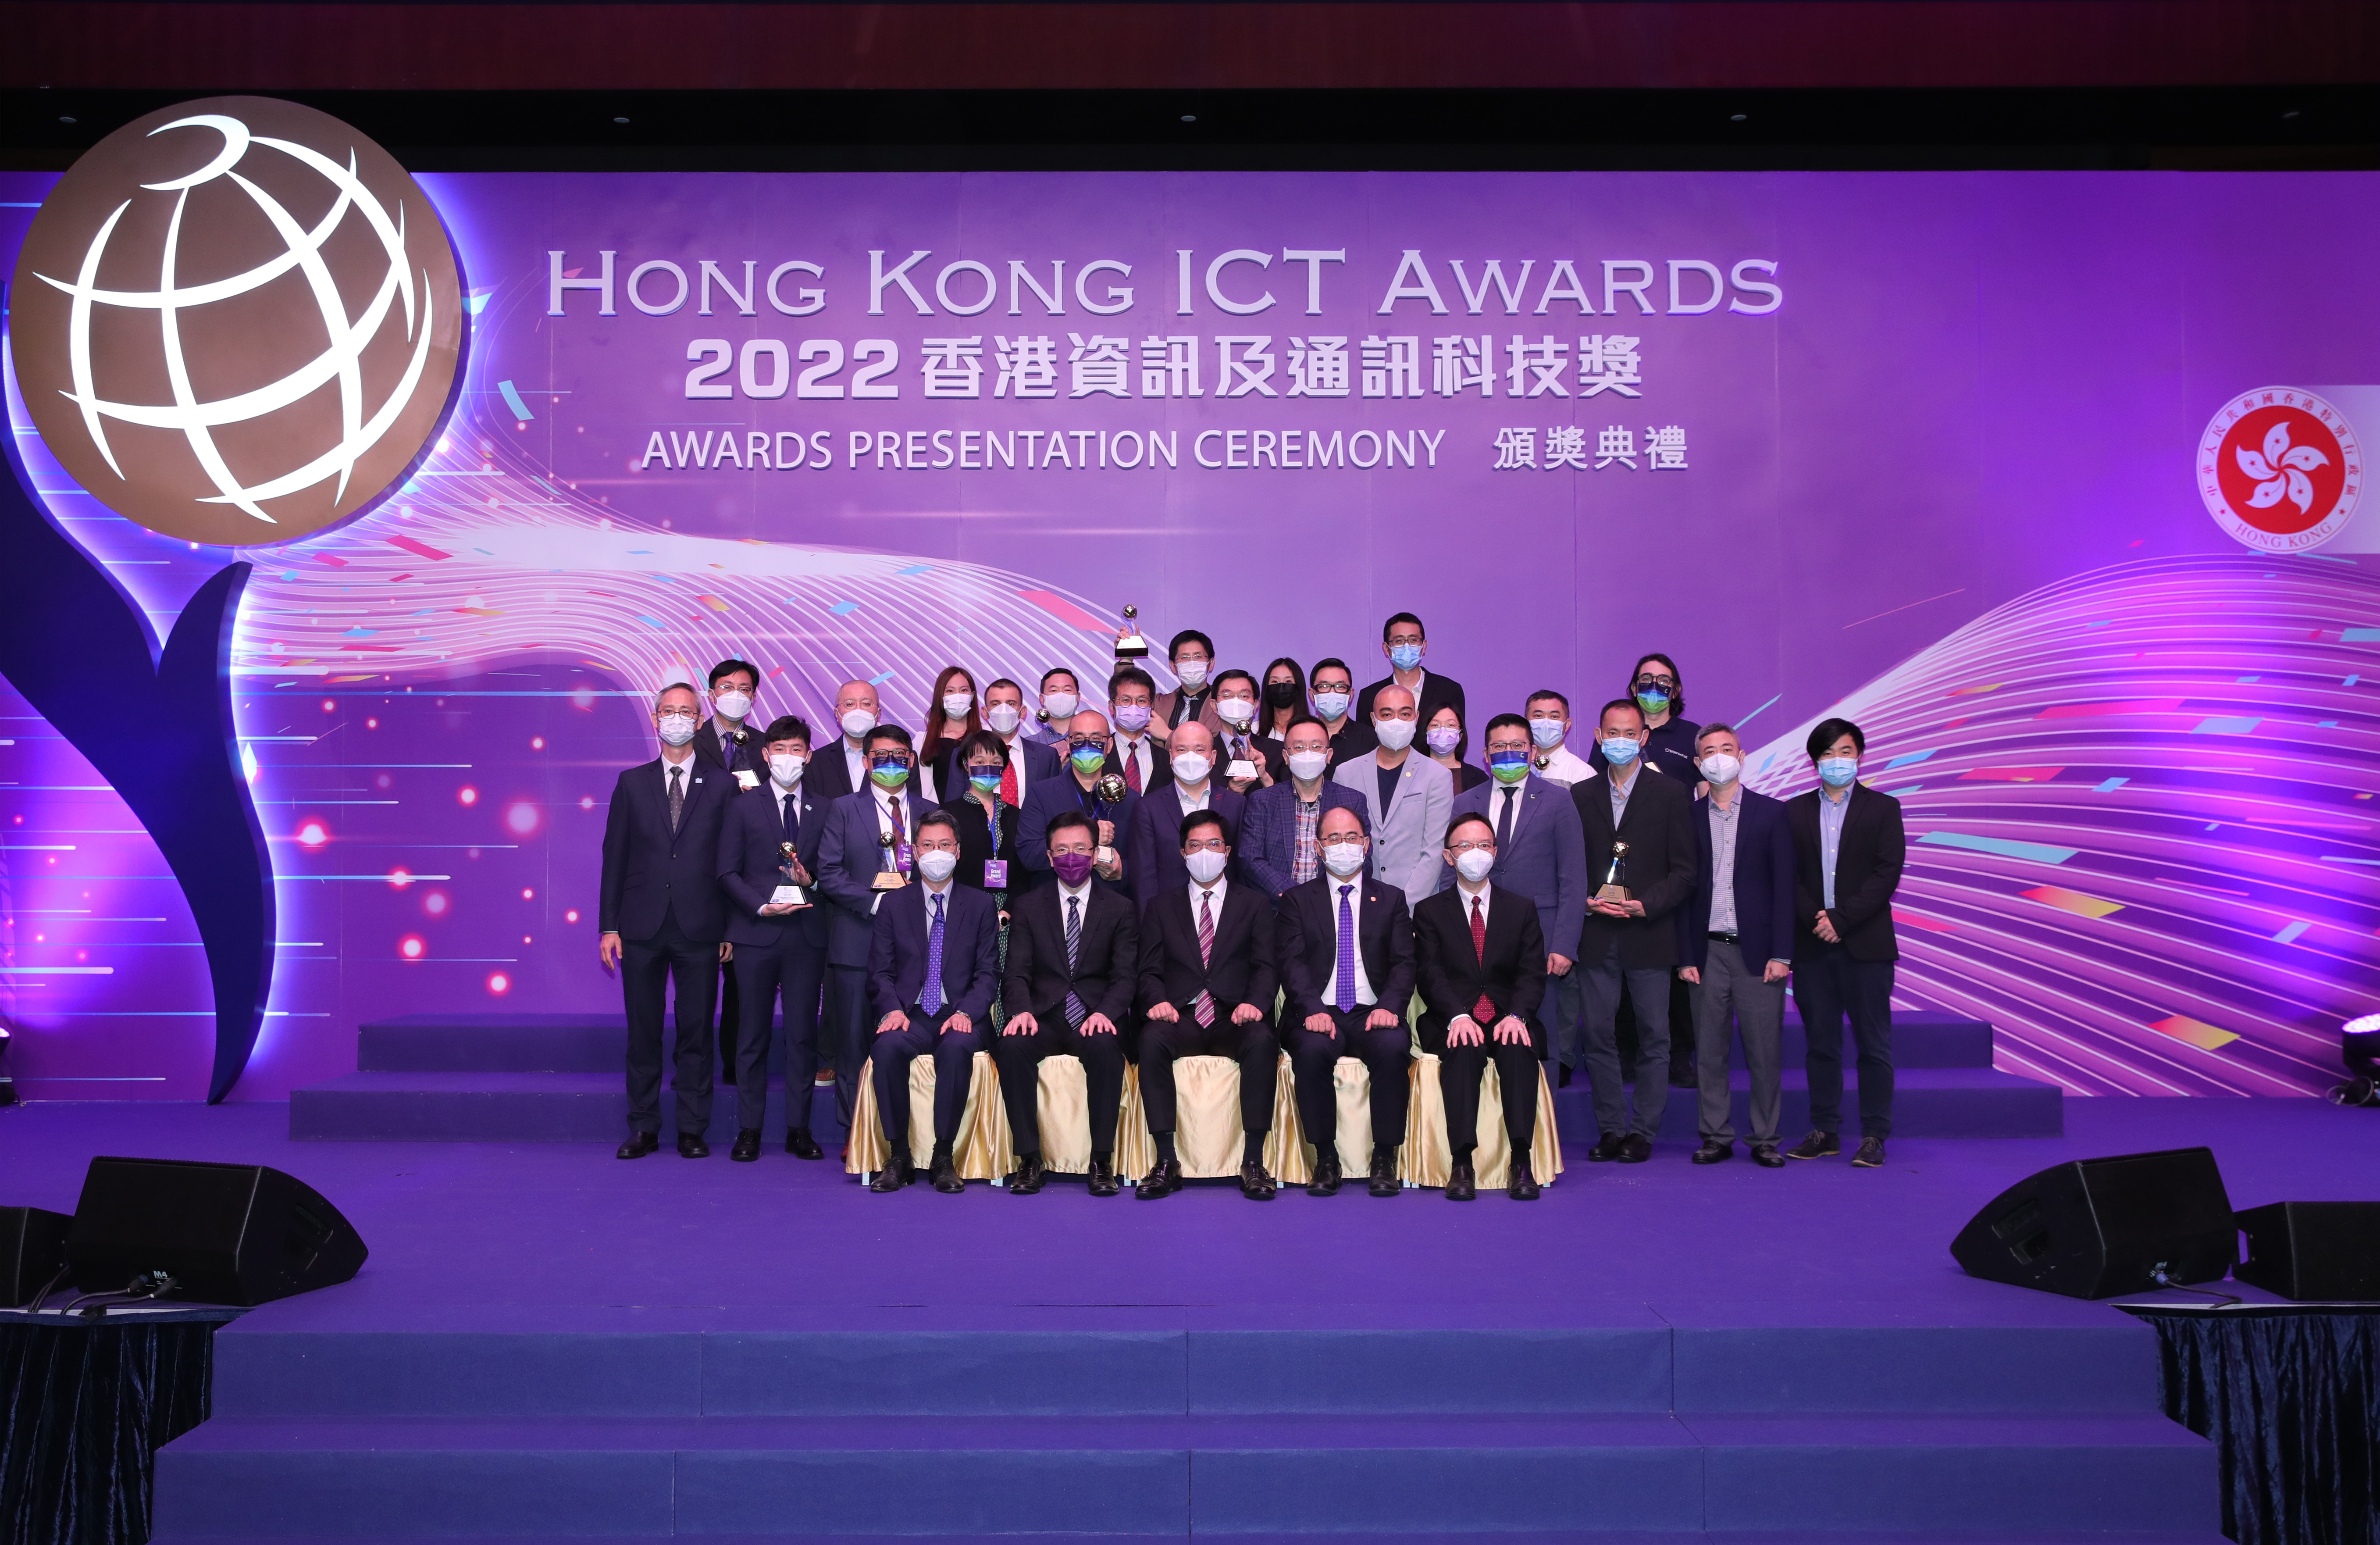 Hong Kong ICT Awards 2022 Smart Living Award Winners Group Photo